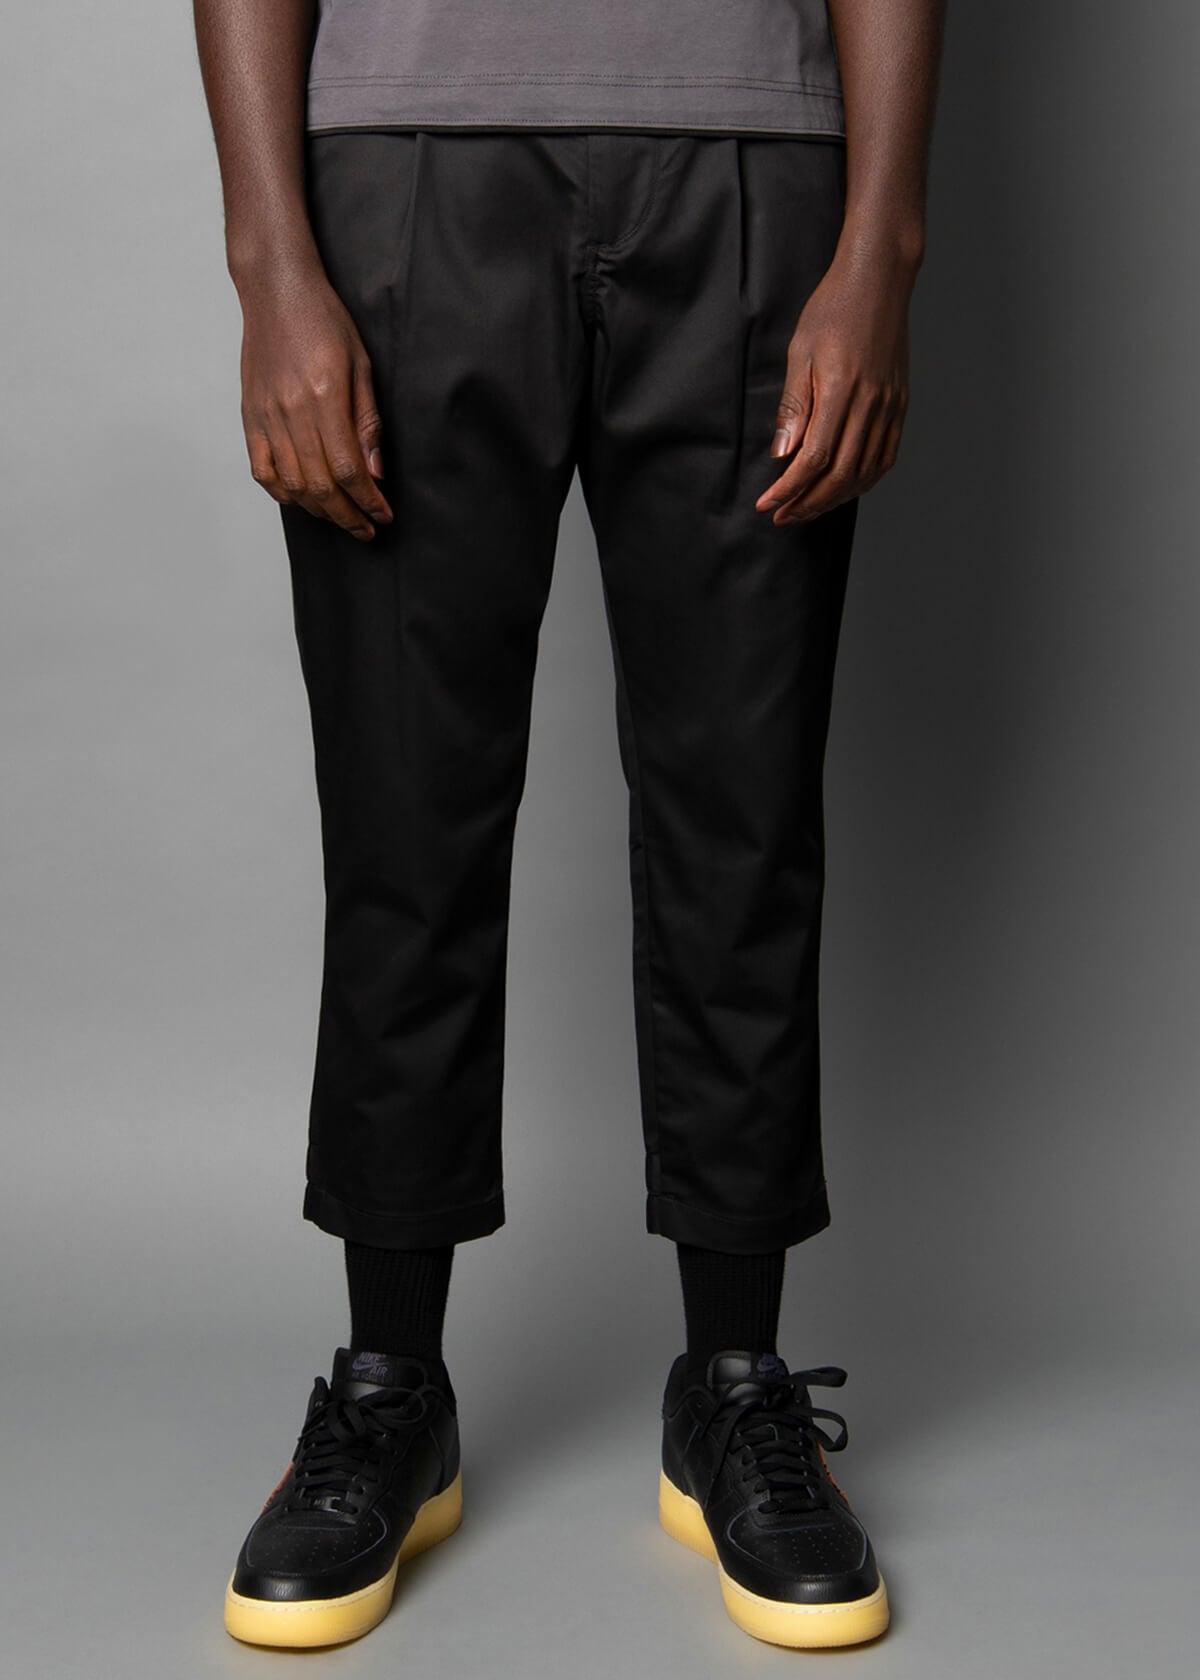 silky smooth black men's pants